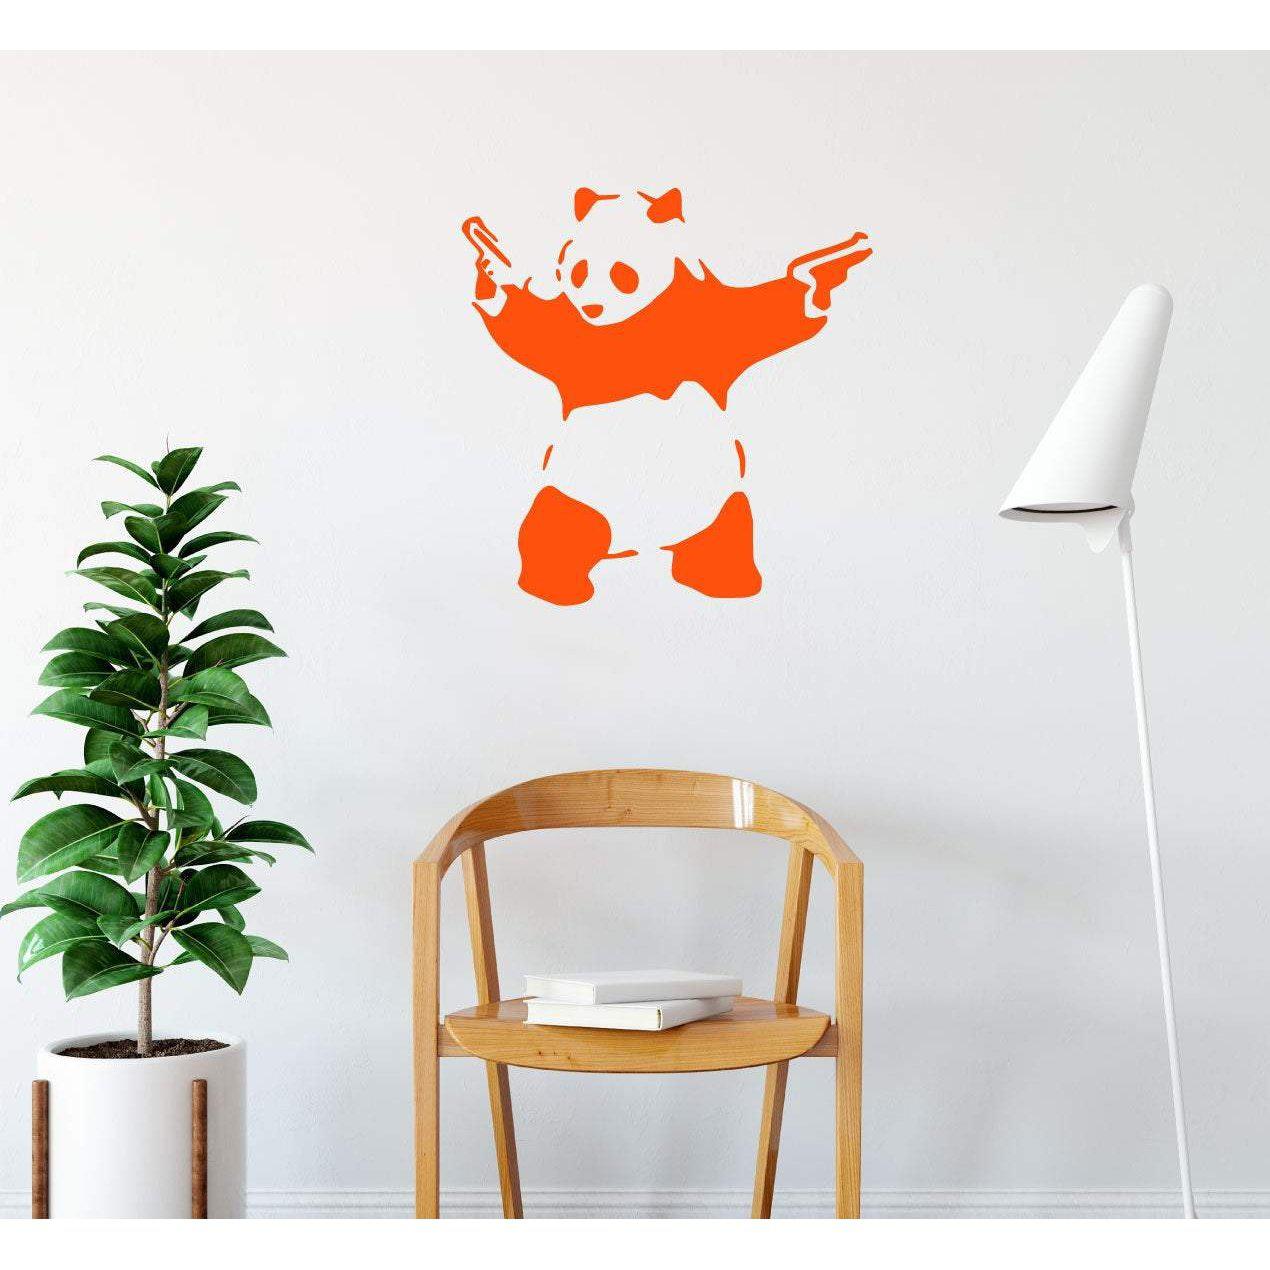 Banksy Panda With Guns Wall Sticker